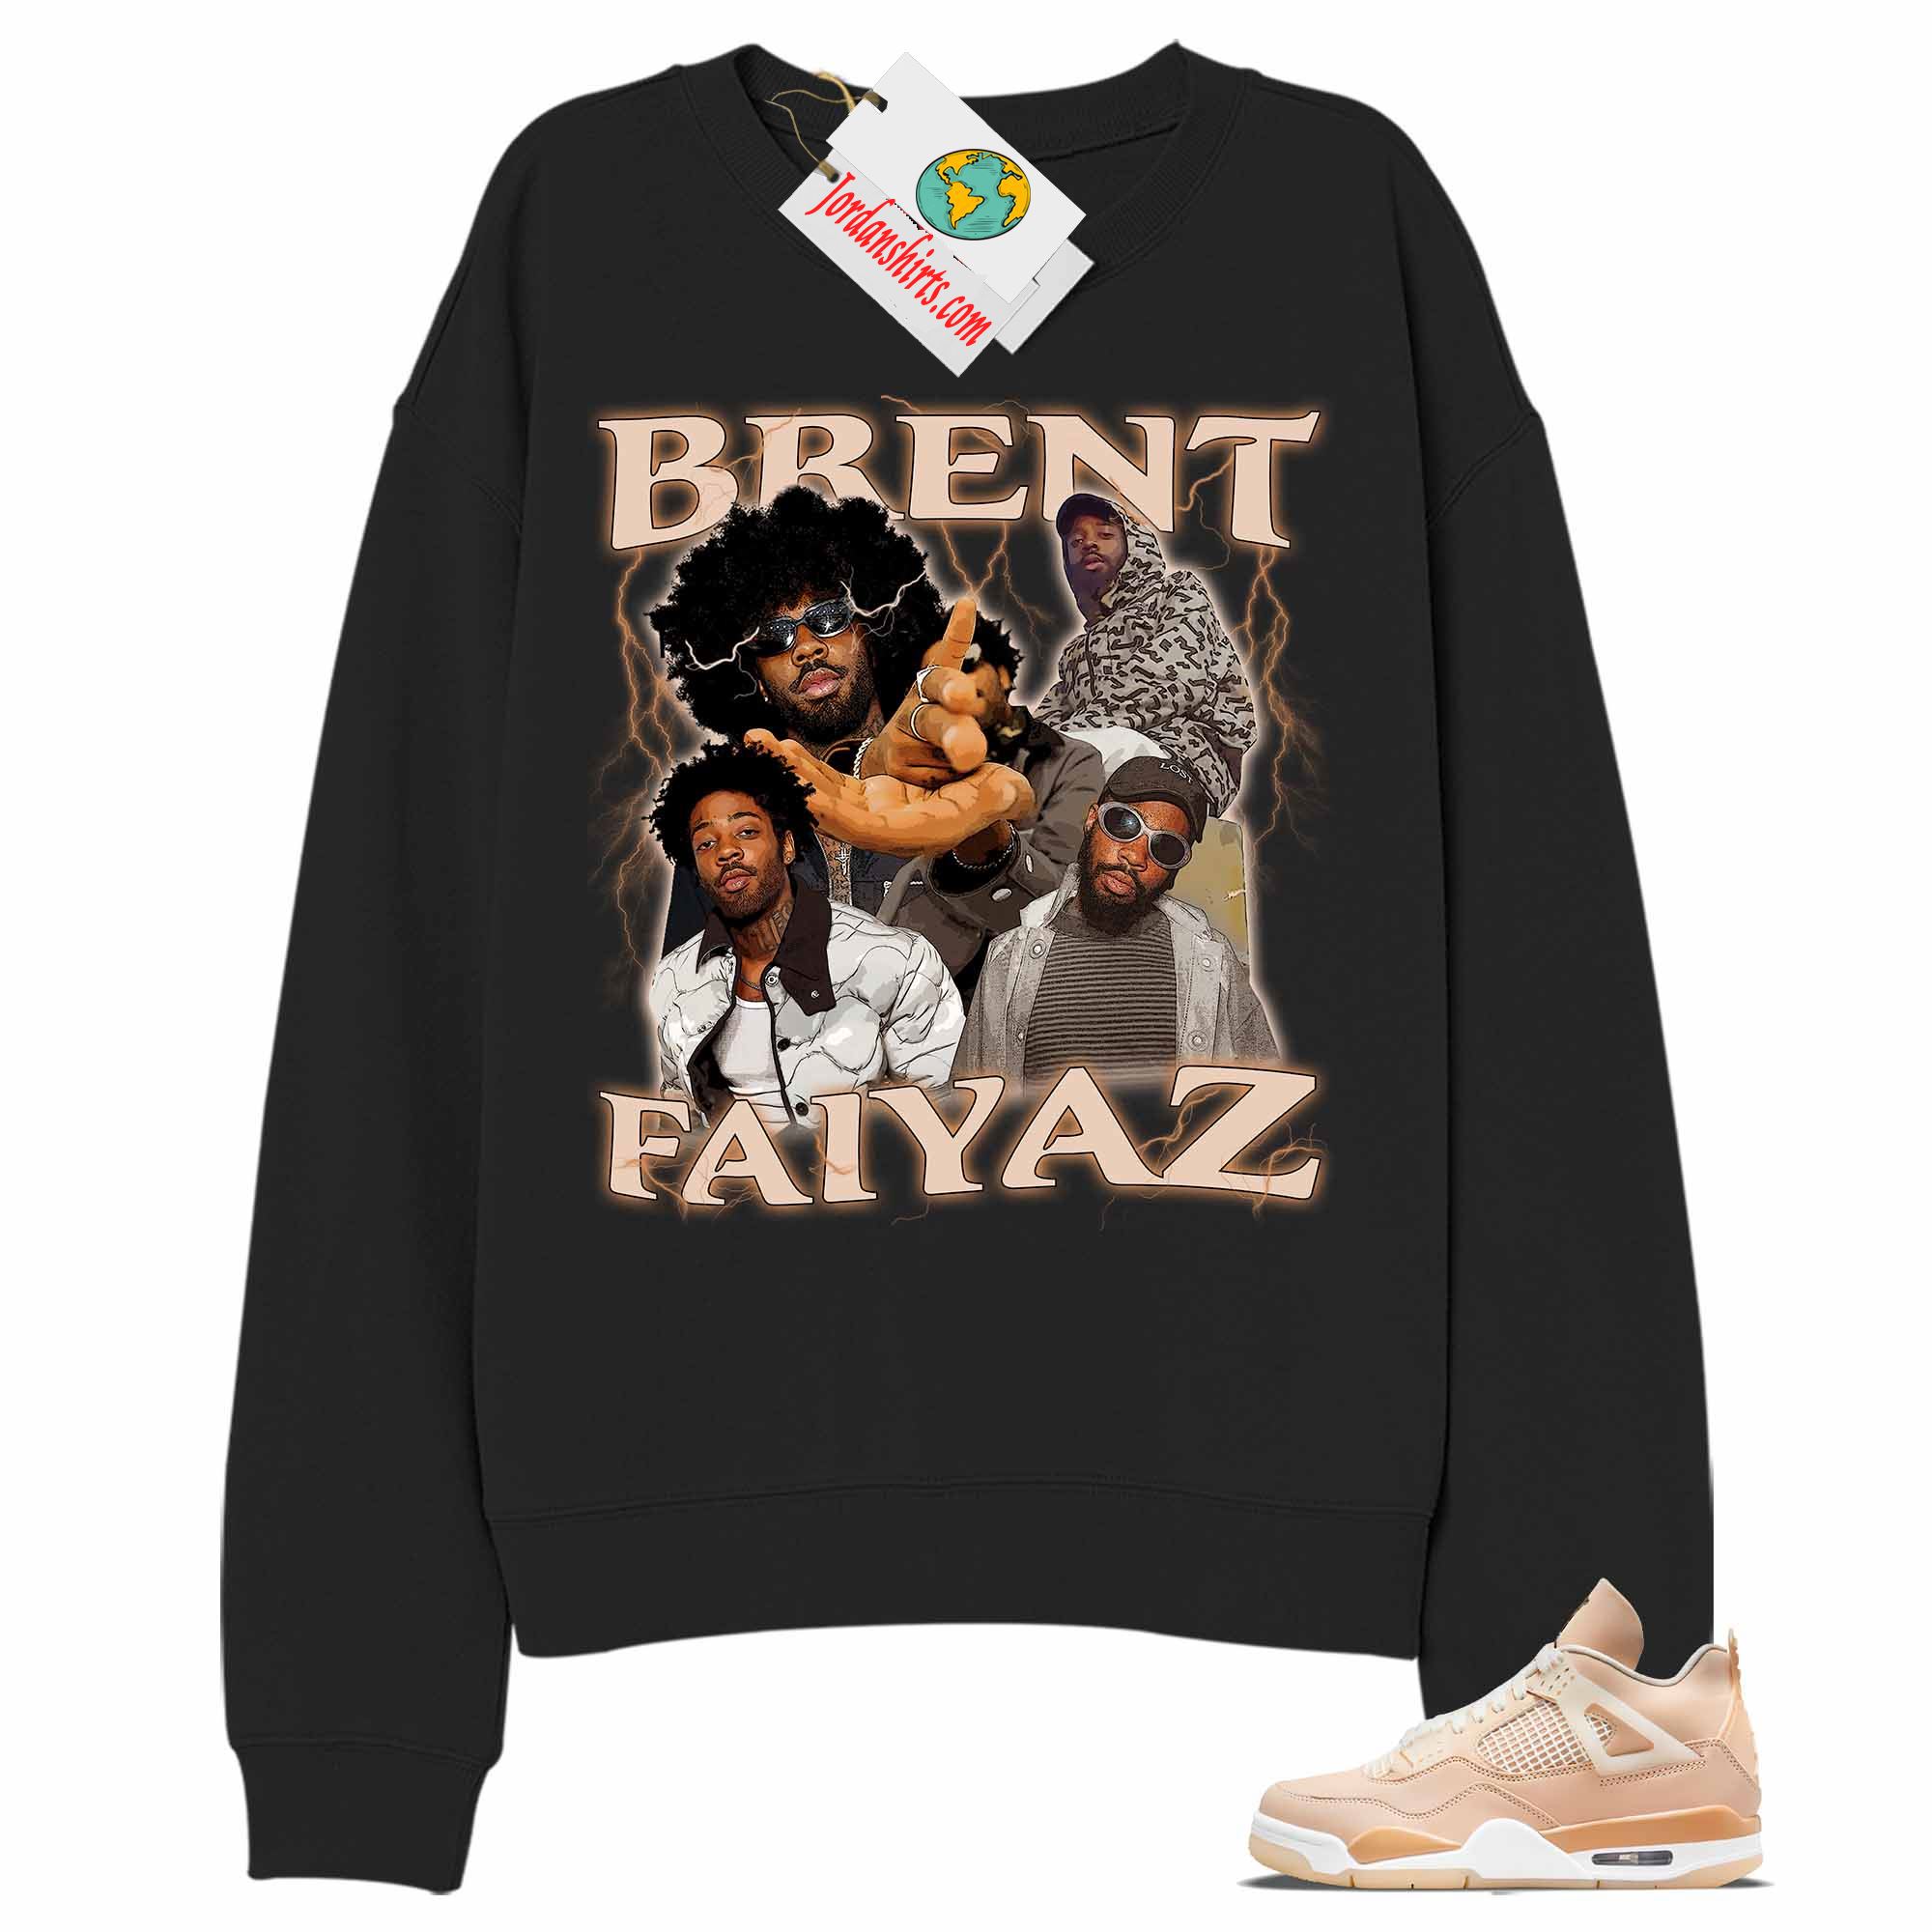 Jordan 4 Sweatshirt, Brent Faiyaz Retro Vintage 90s Hip Hop Raptees Black Sweatshirt Air Jordan 4 Shimmer 4s Full Size Up To 5xl